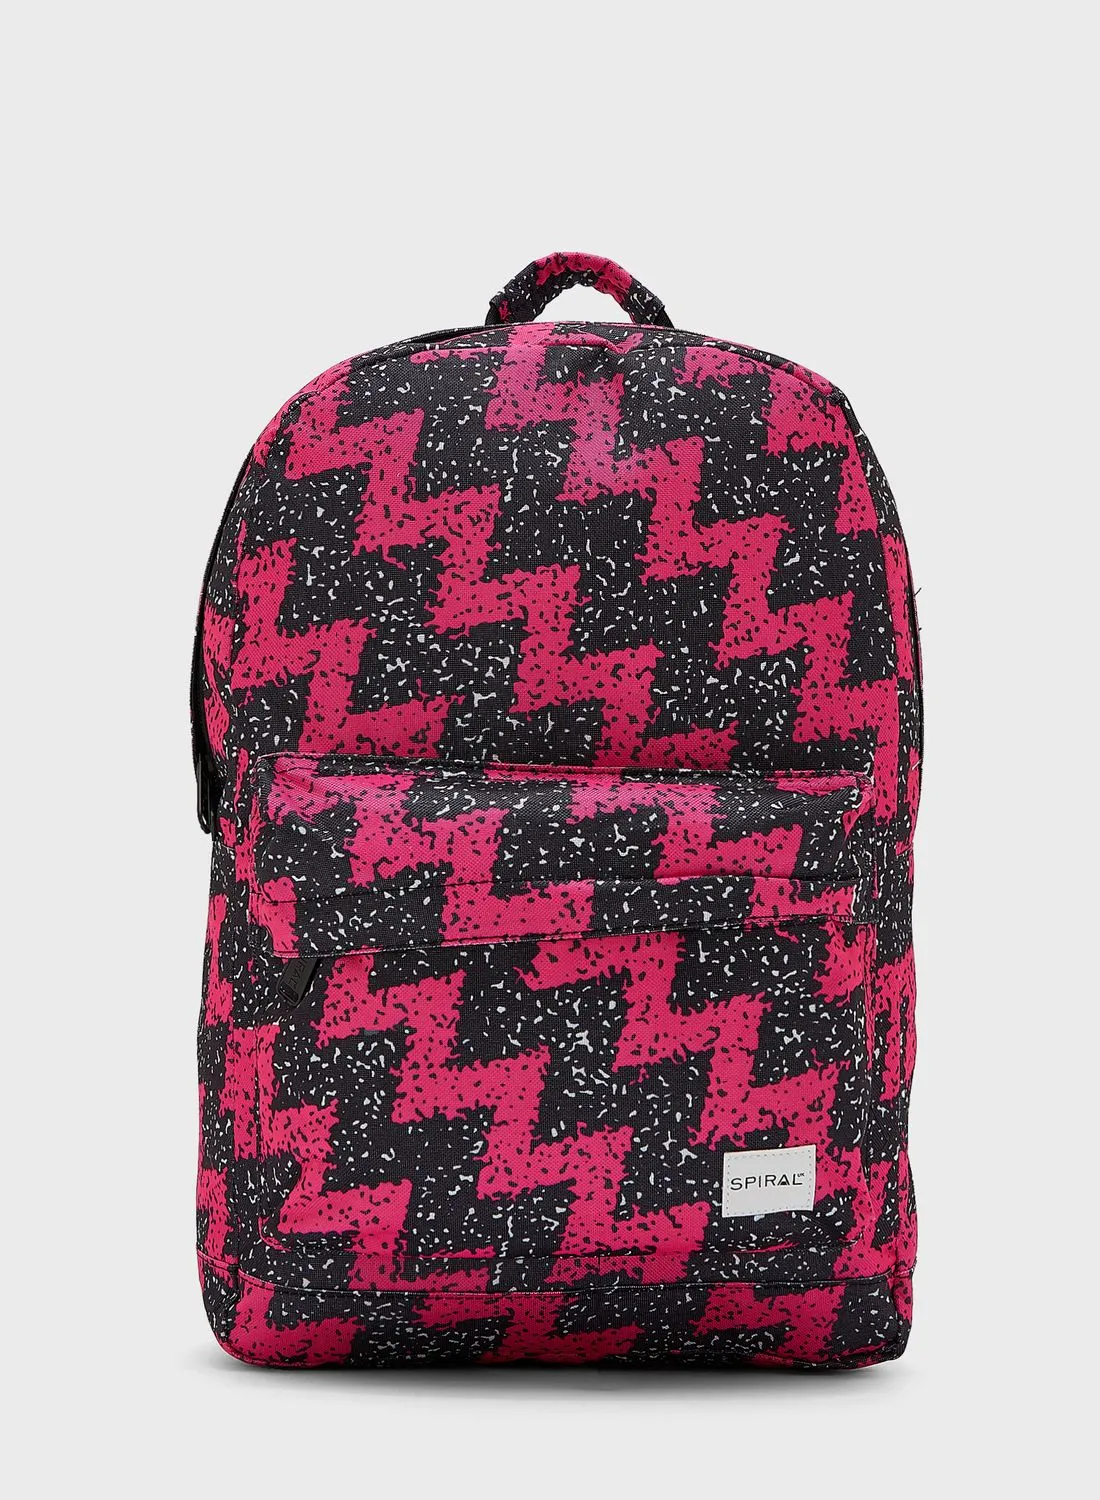 Spiral Top Handle Backpack